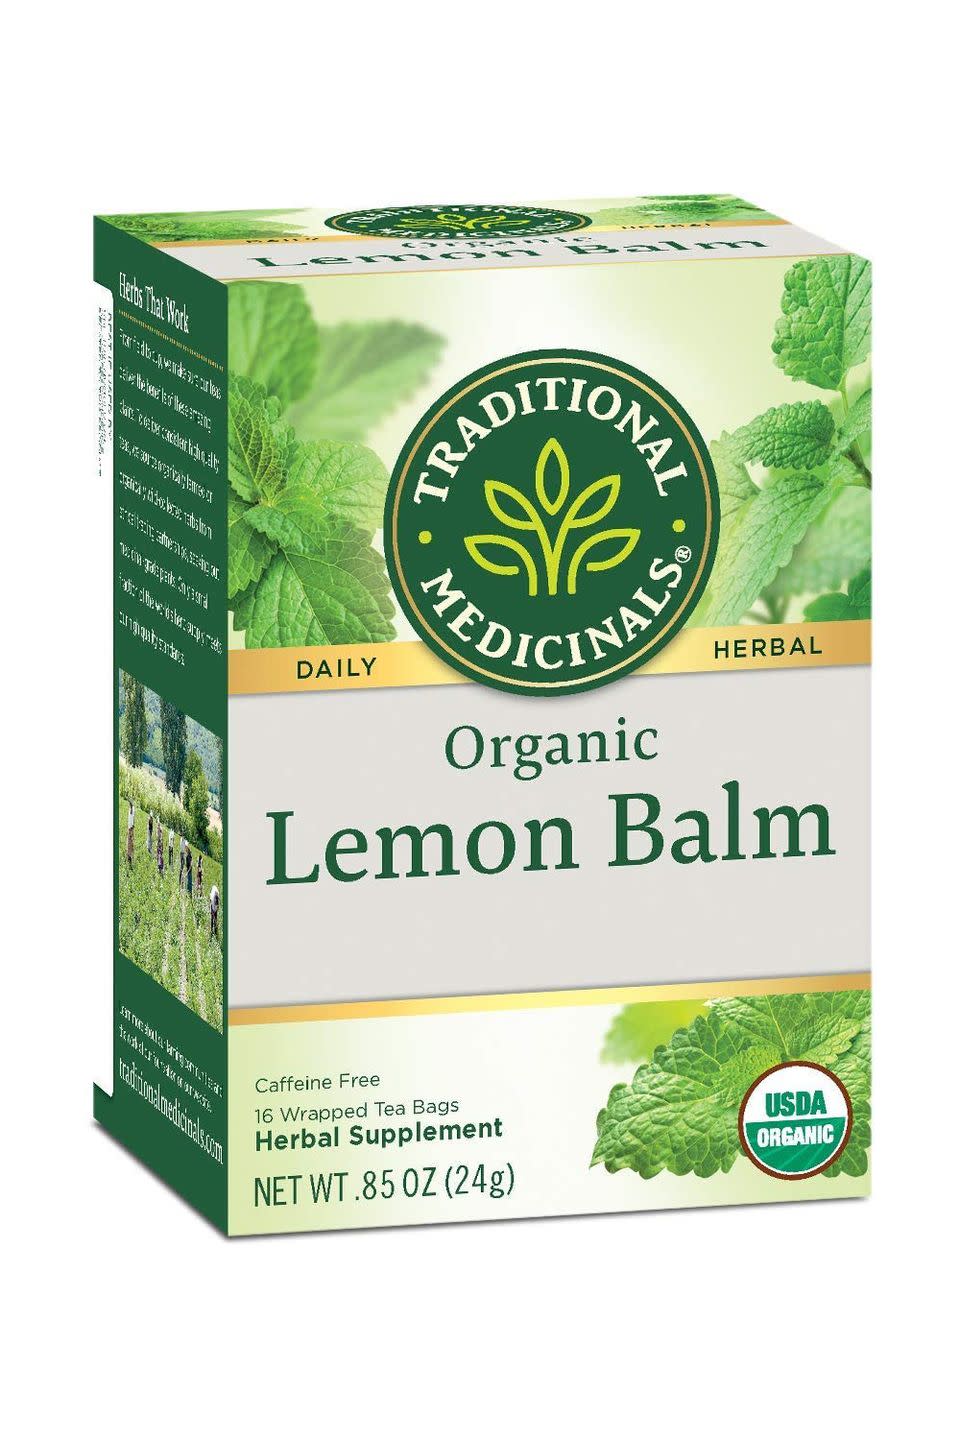 5) Traditional Medicinals Organic Lemon Balm Herbal Tea